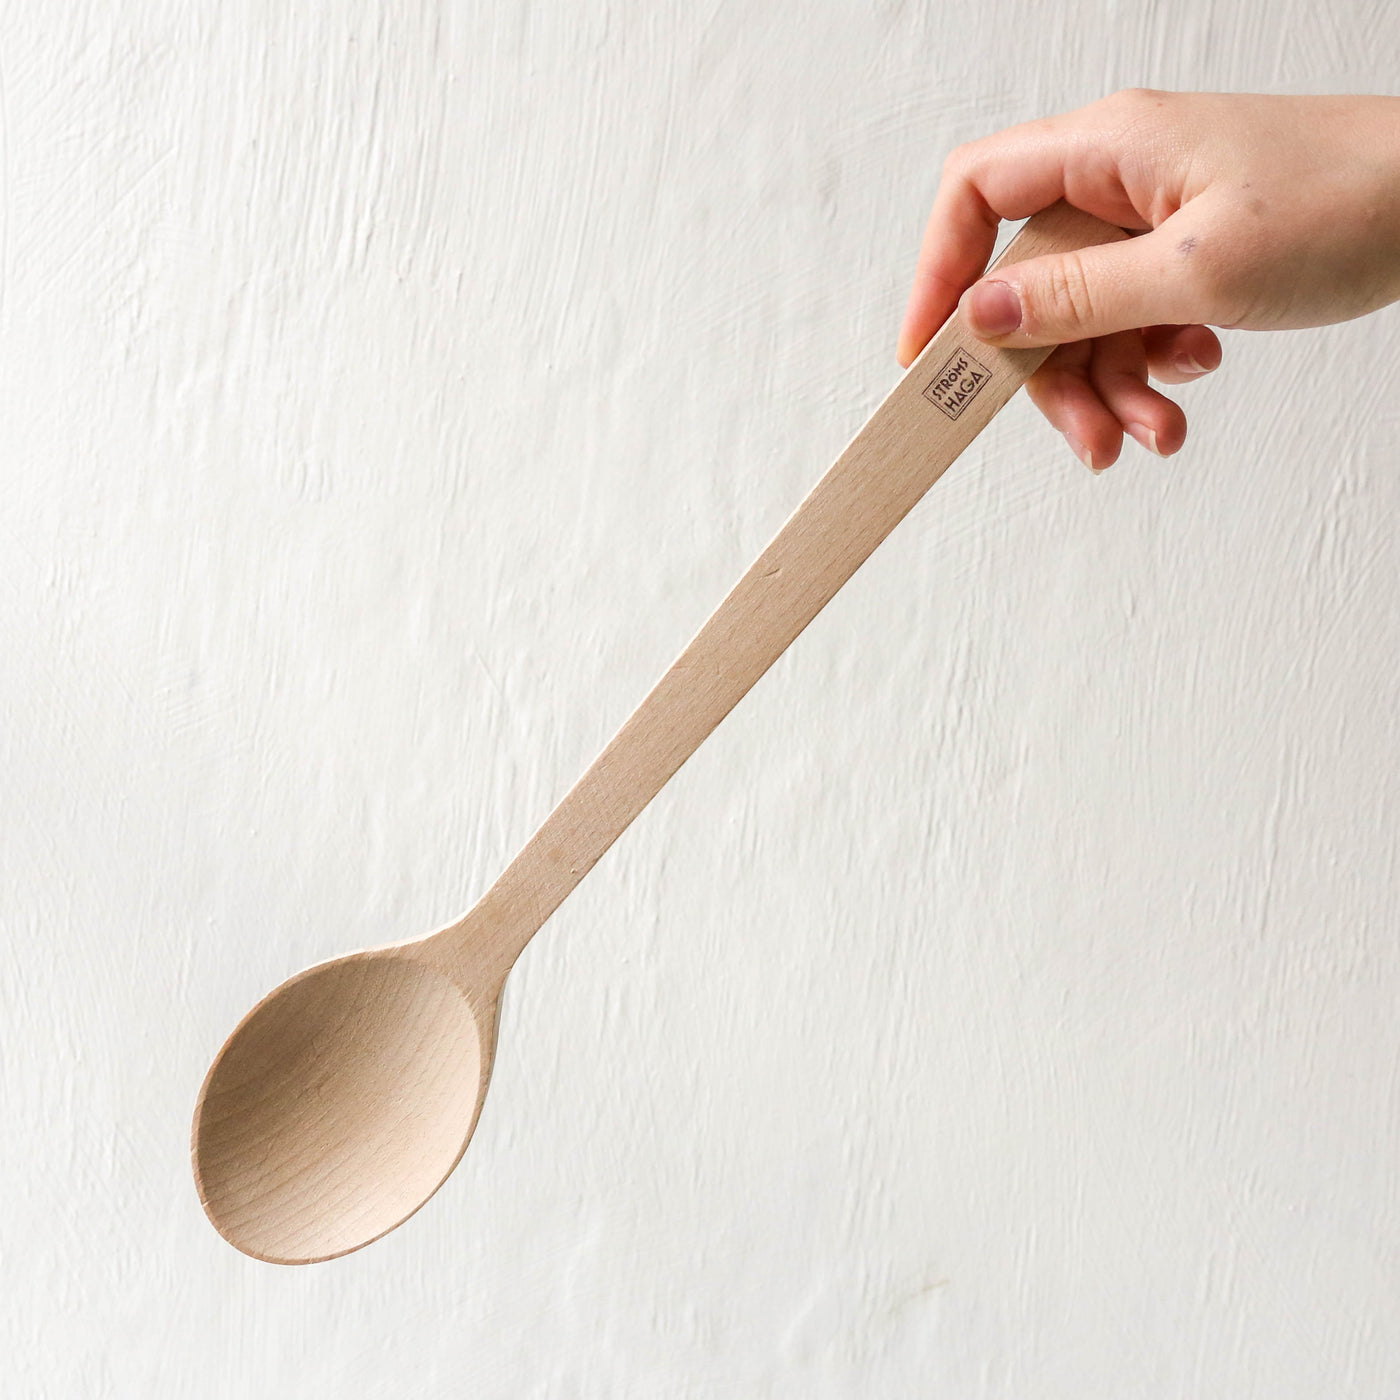 32cm Wooden Spoon